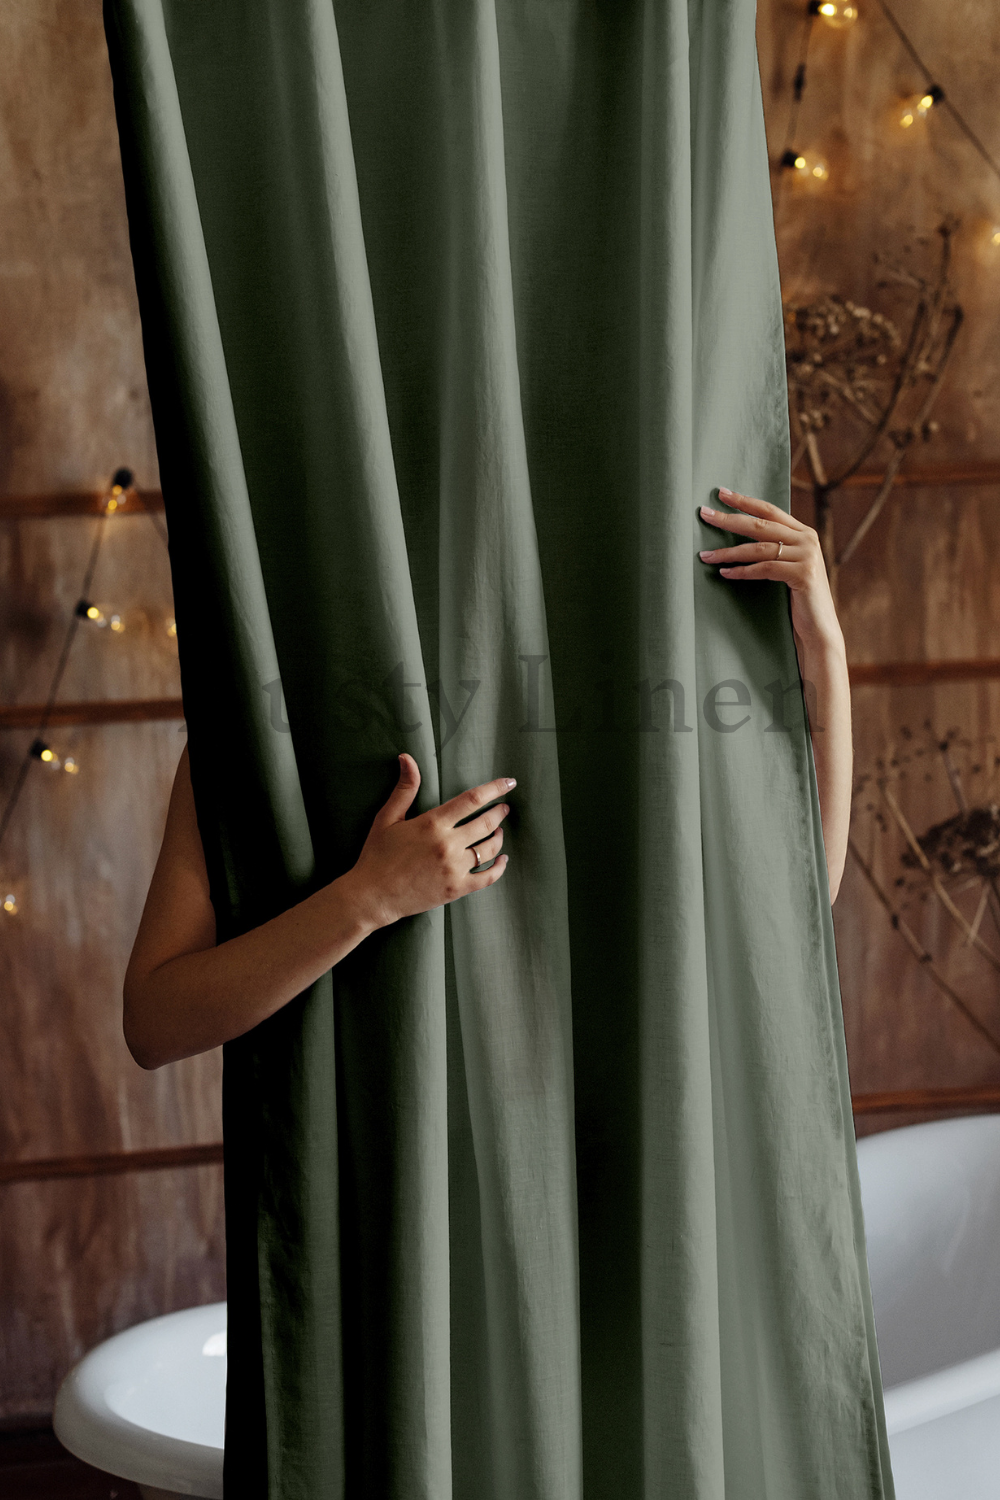 Best housewarming gift - Bathroom decoration with Dusty Linen green bathroom shower drape